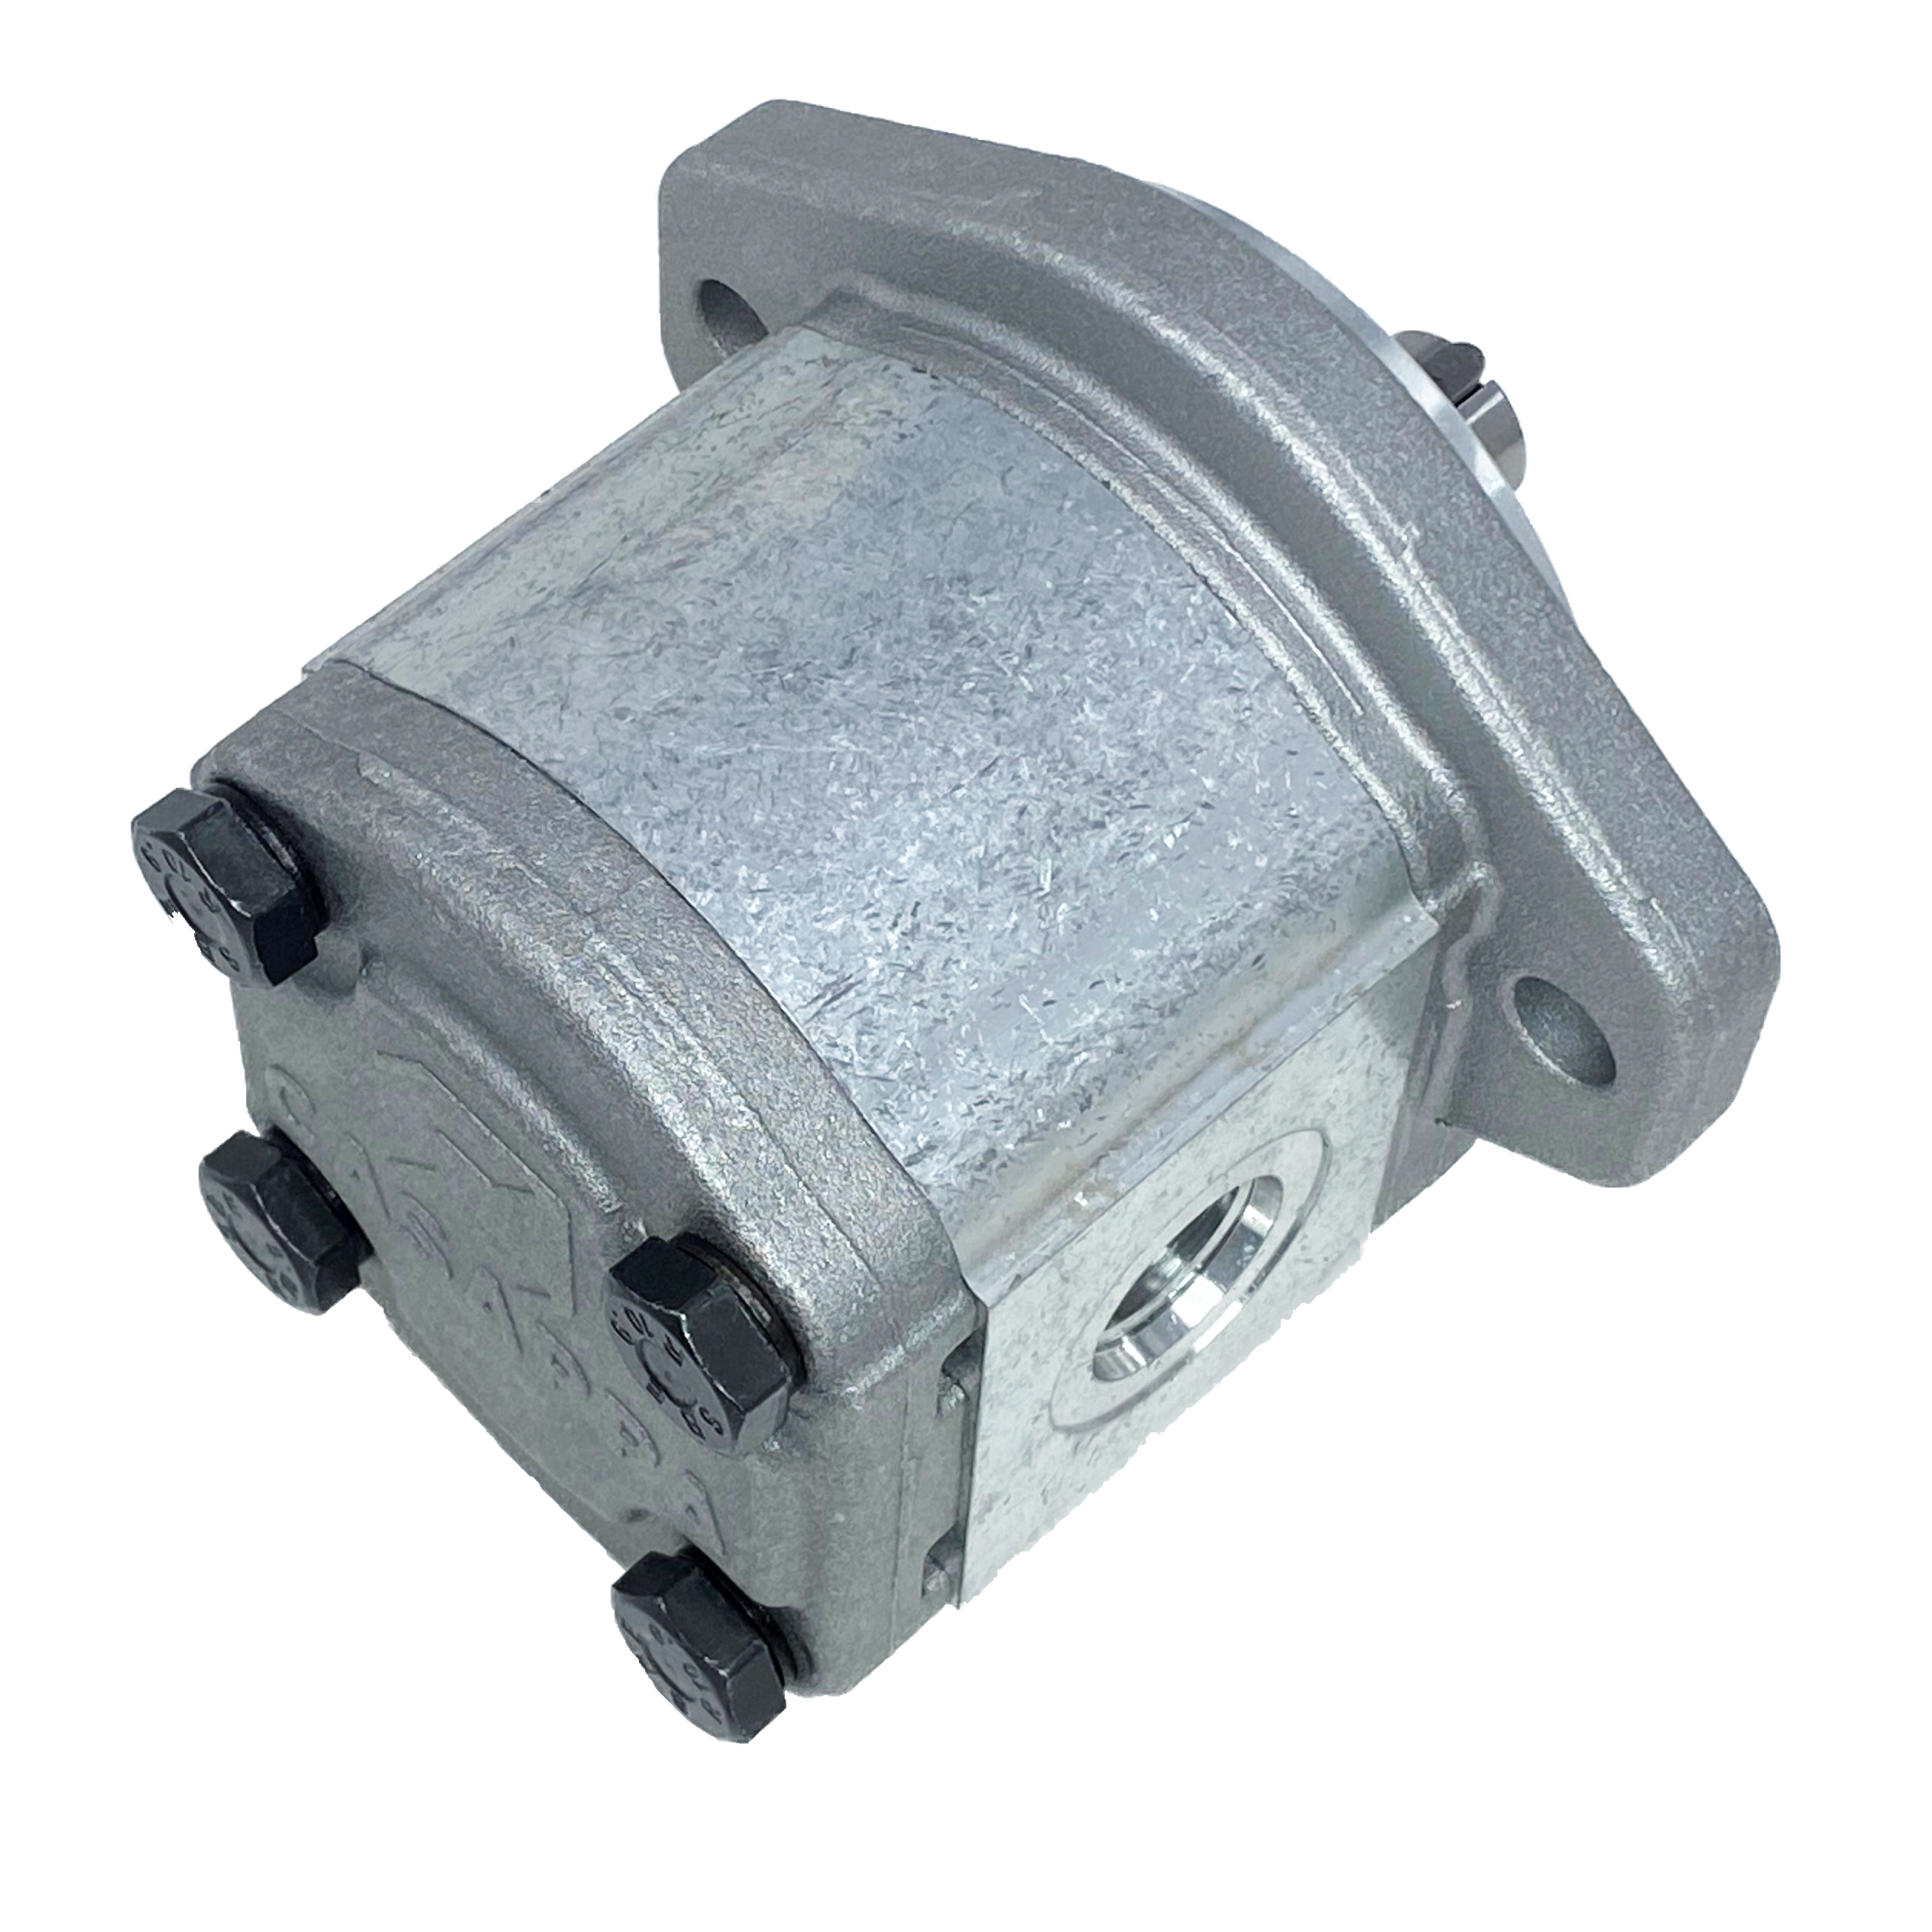 PLM20.11,2R0-50S1-LOC/OC-N-EL : Casappa Polaris Gear Motor, 11.23cc, 3625psi Rated, 3500RPM, Reversible Rear External Drain, 3/4" Bore x 3/16" Key Shaft, SAE A 2-Bolt Flange, 0.625 (5/8") #10 SAE Inlet, 0.625 (5/8") #10 SAE Outlet, Aluminum Body & Flange